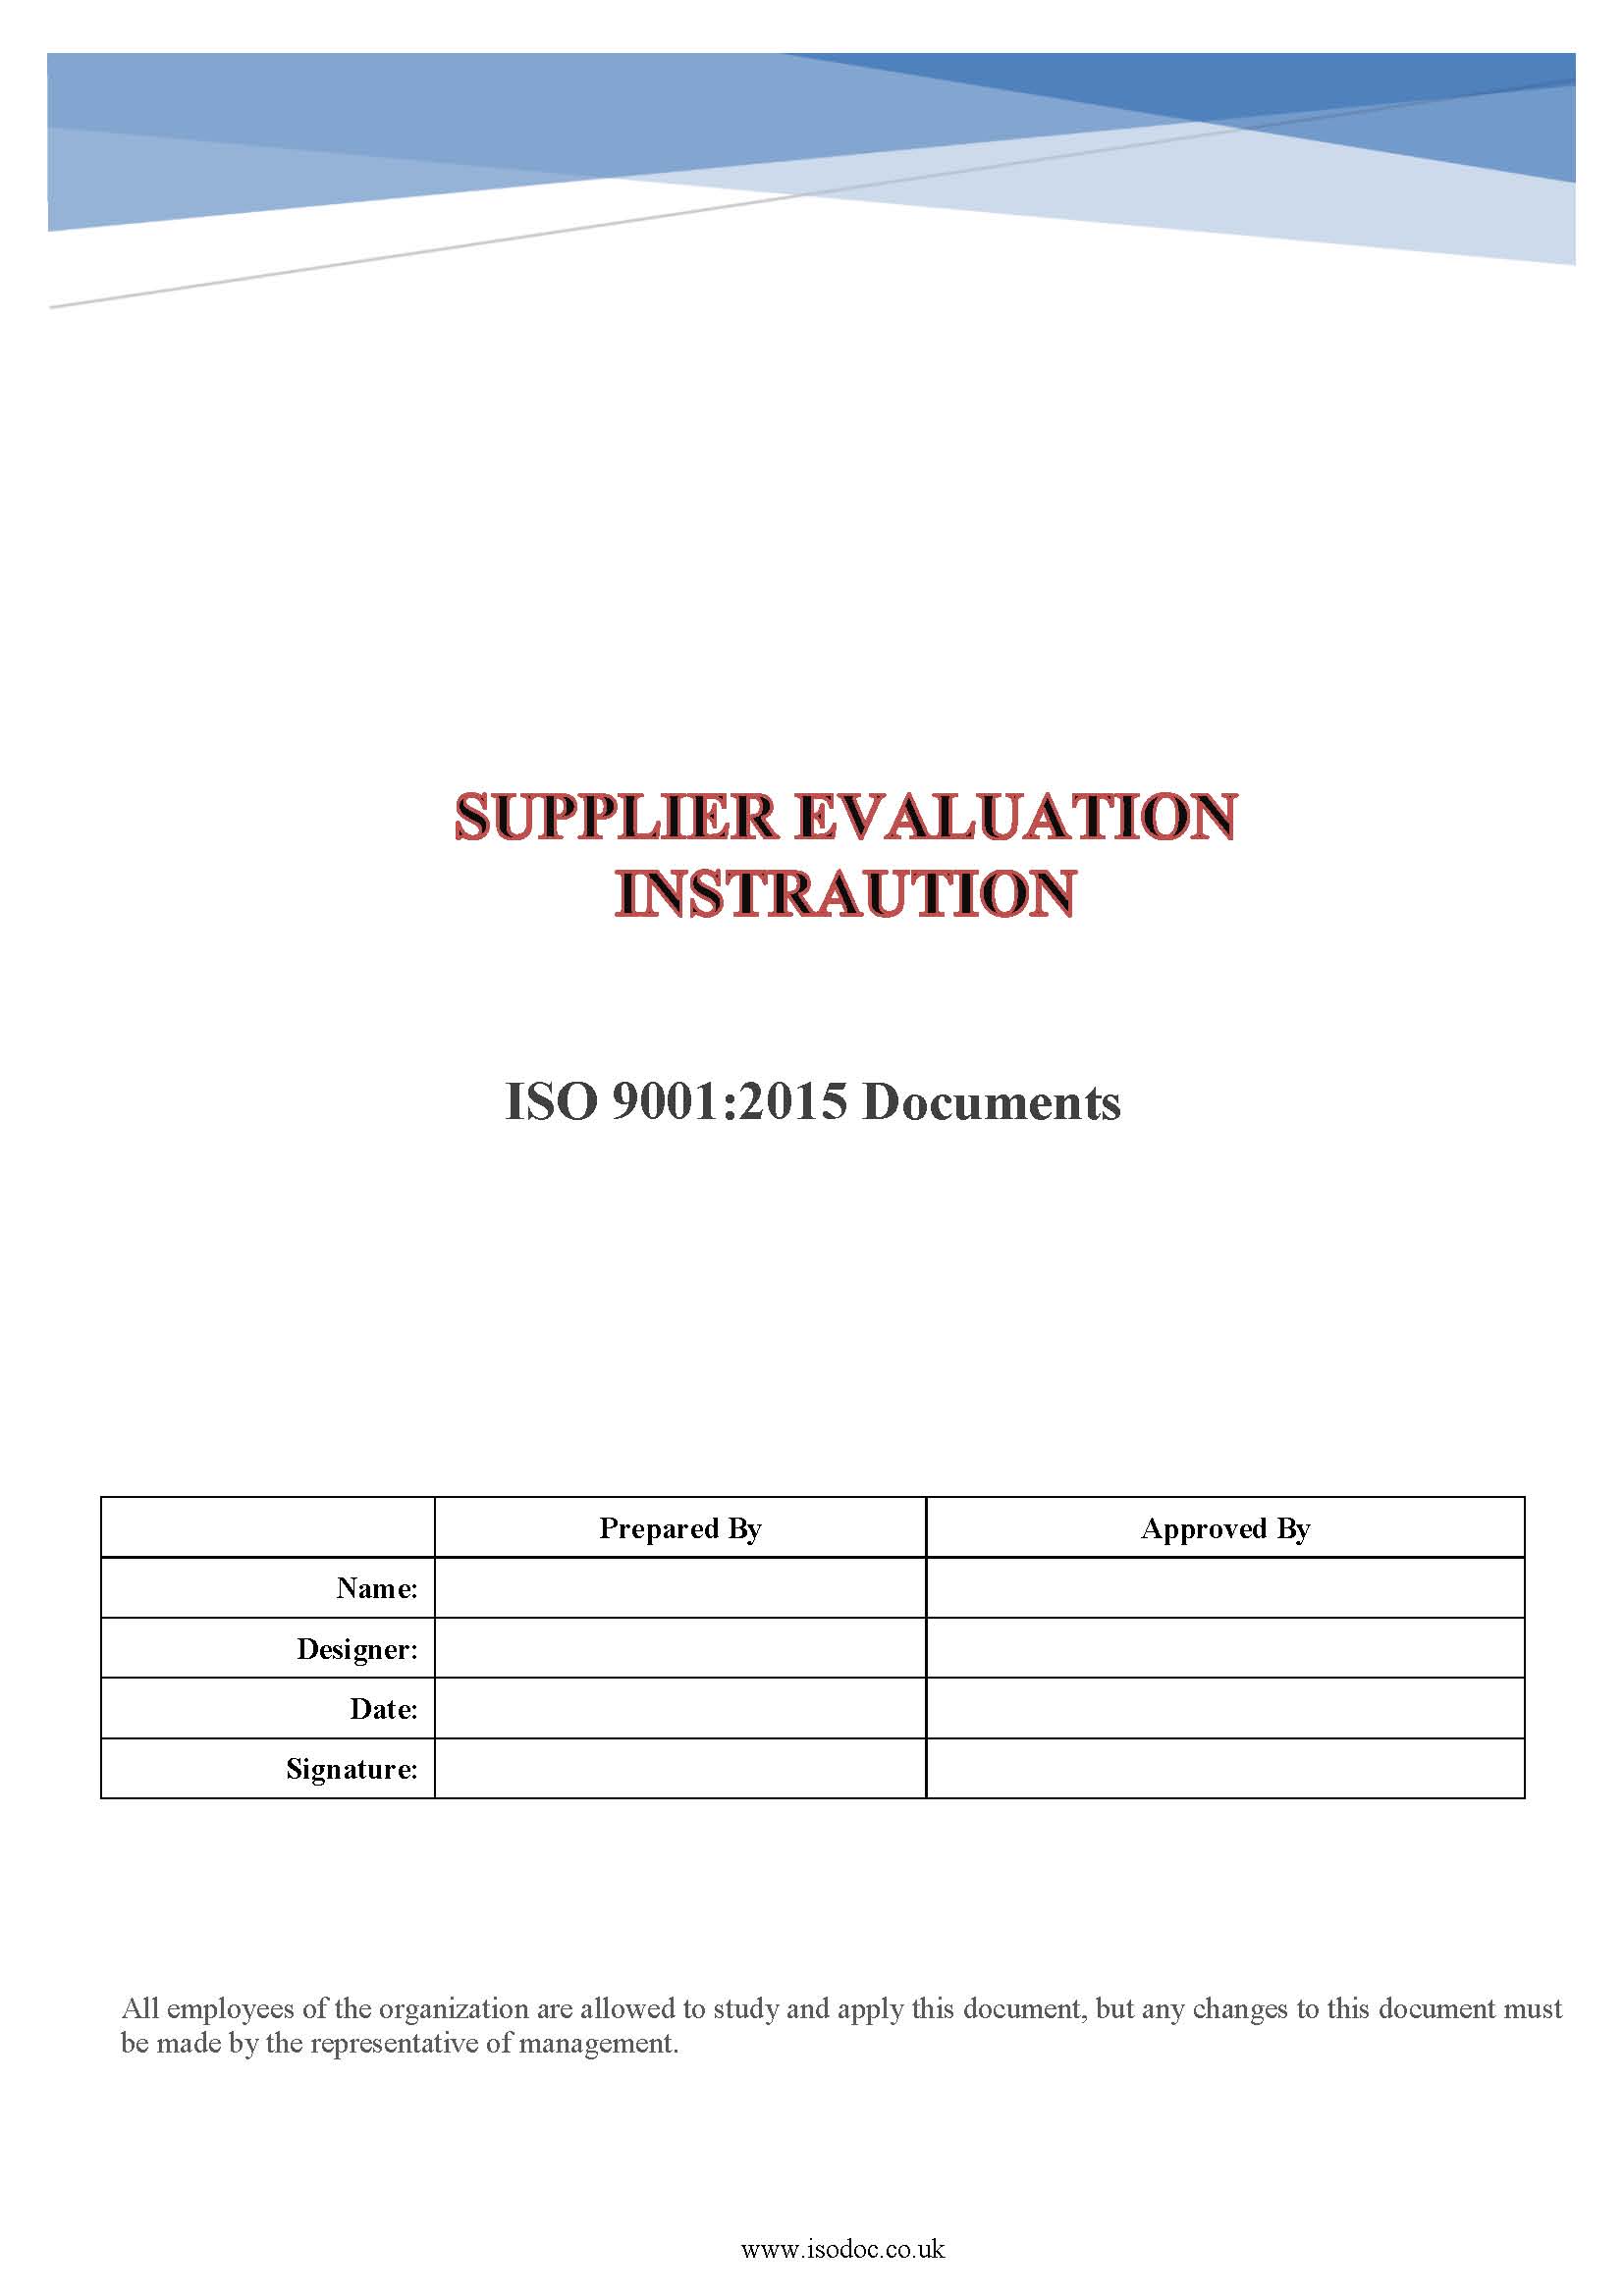 Supplier Evaluation work instruction